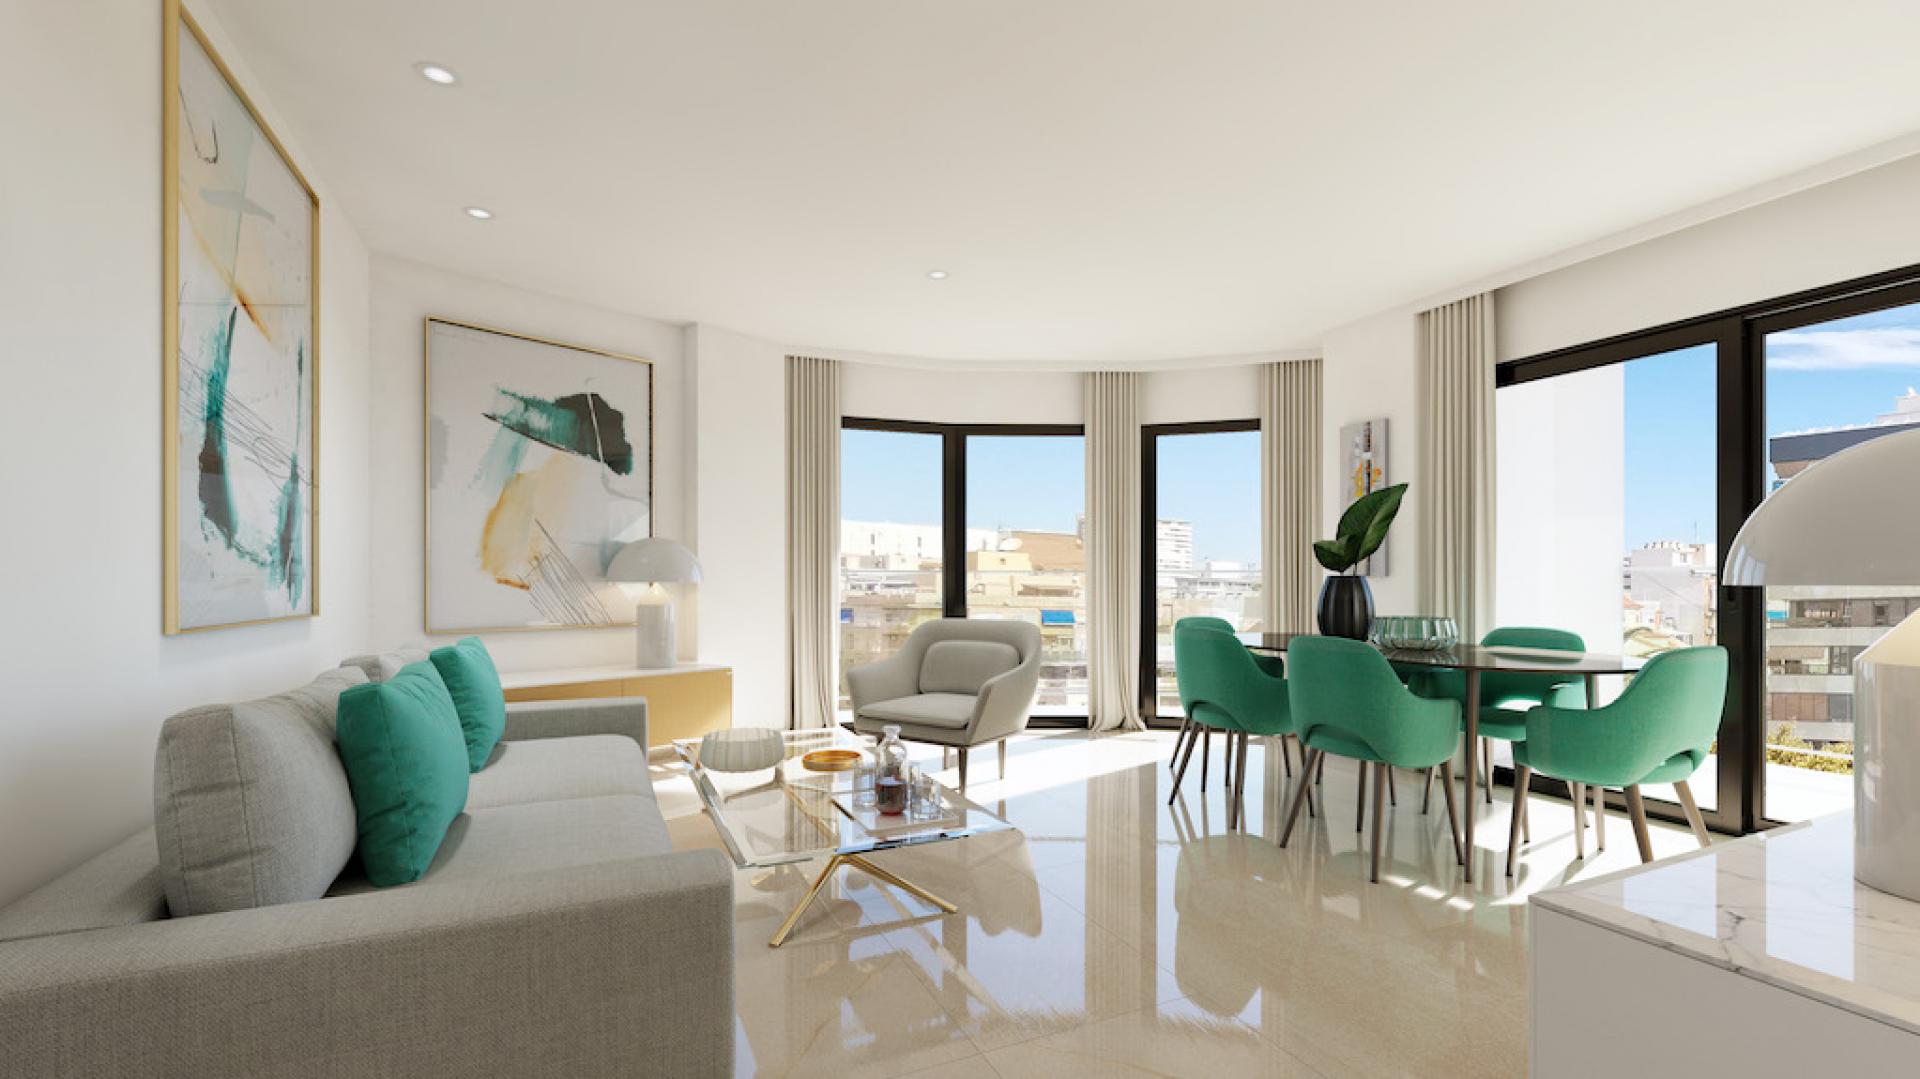 3 sypialnia Mieszkanie z balkonem W Alicante - Nowa konstrukcja in Medvilla Spanje